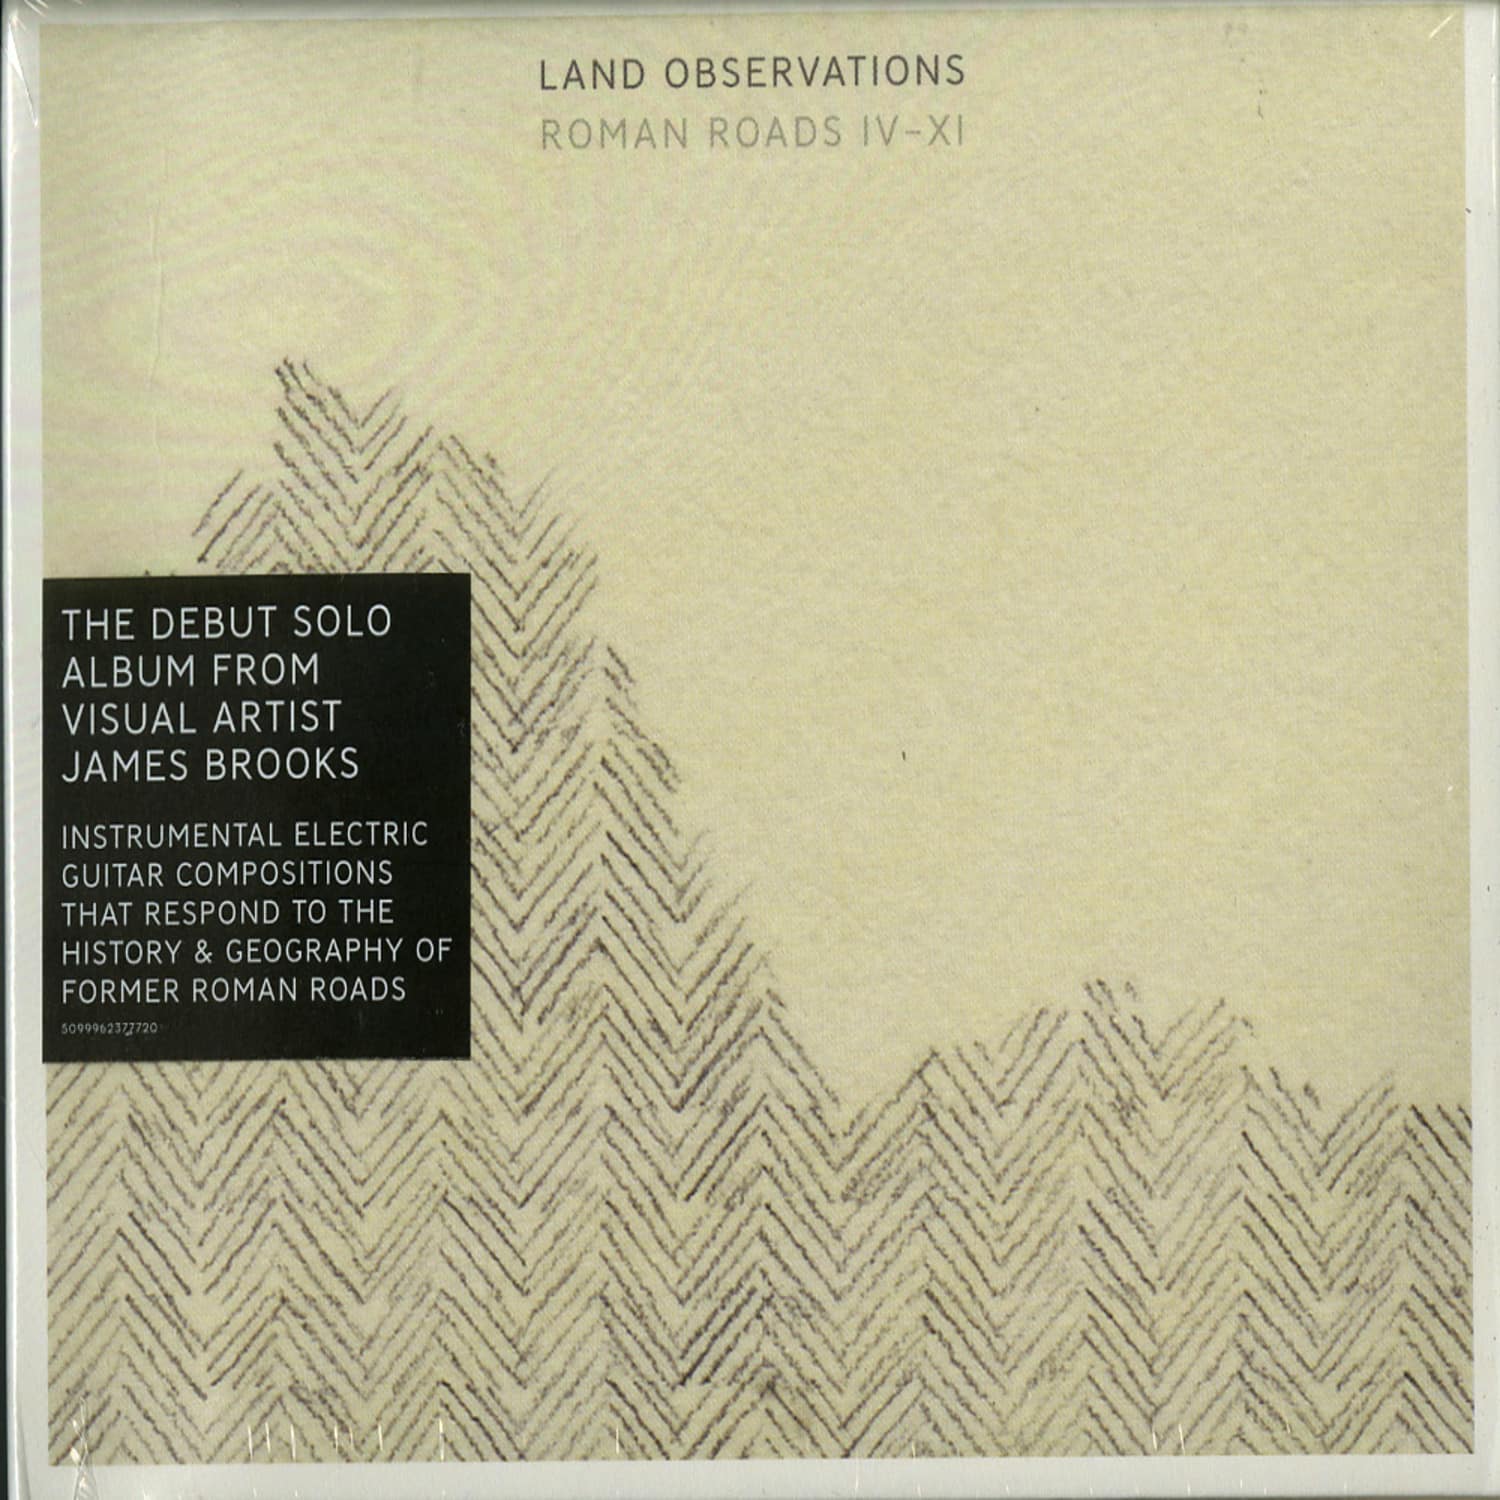 Land Observations - ROMAN ROADS IV - XI 